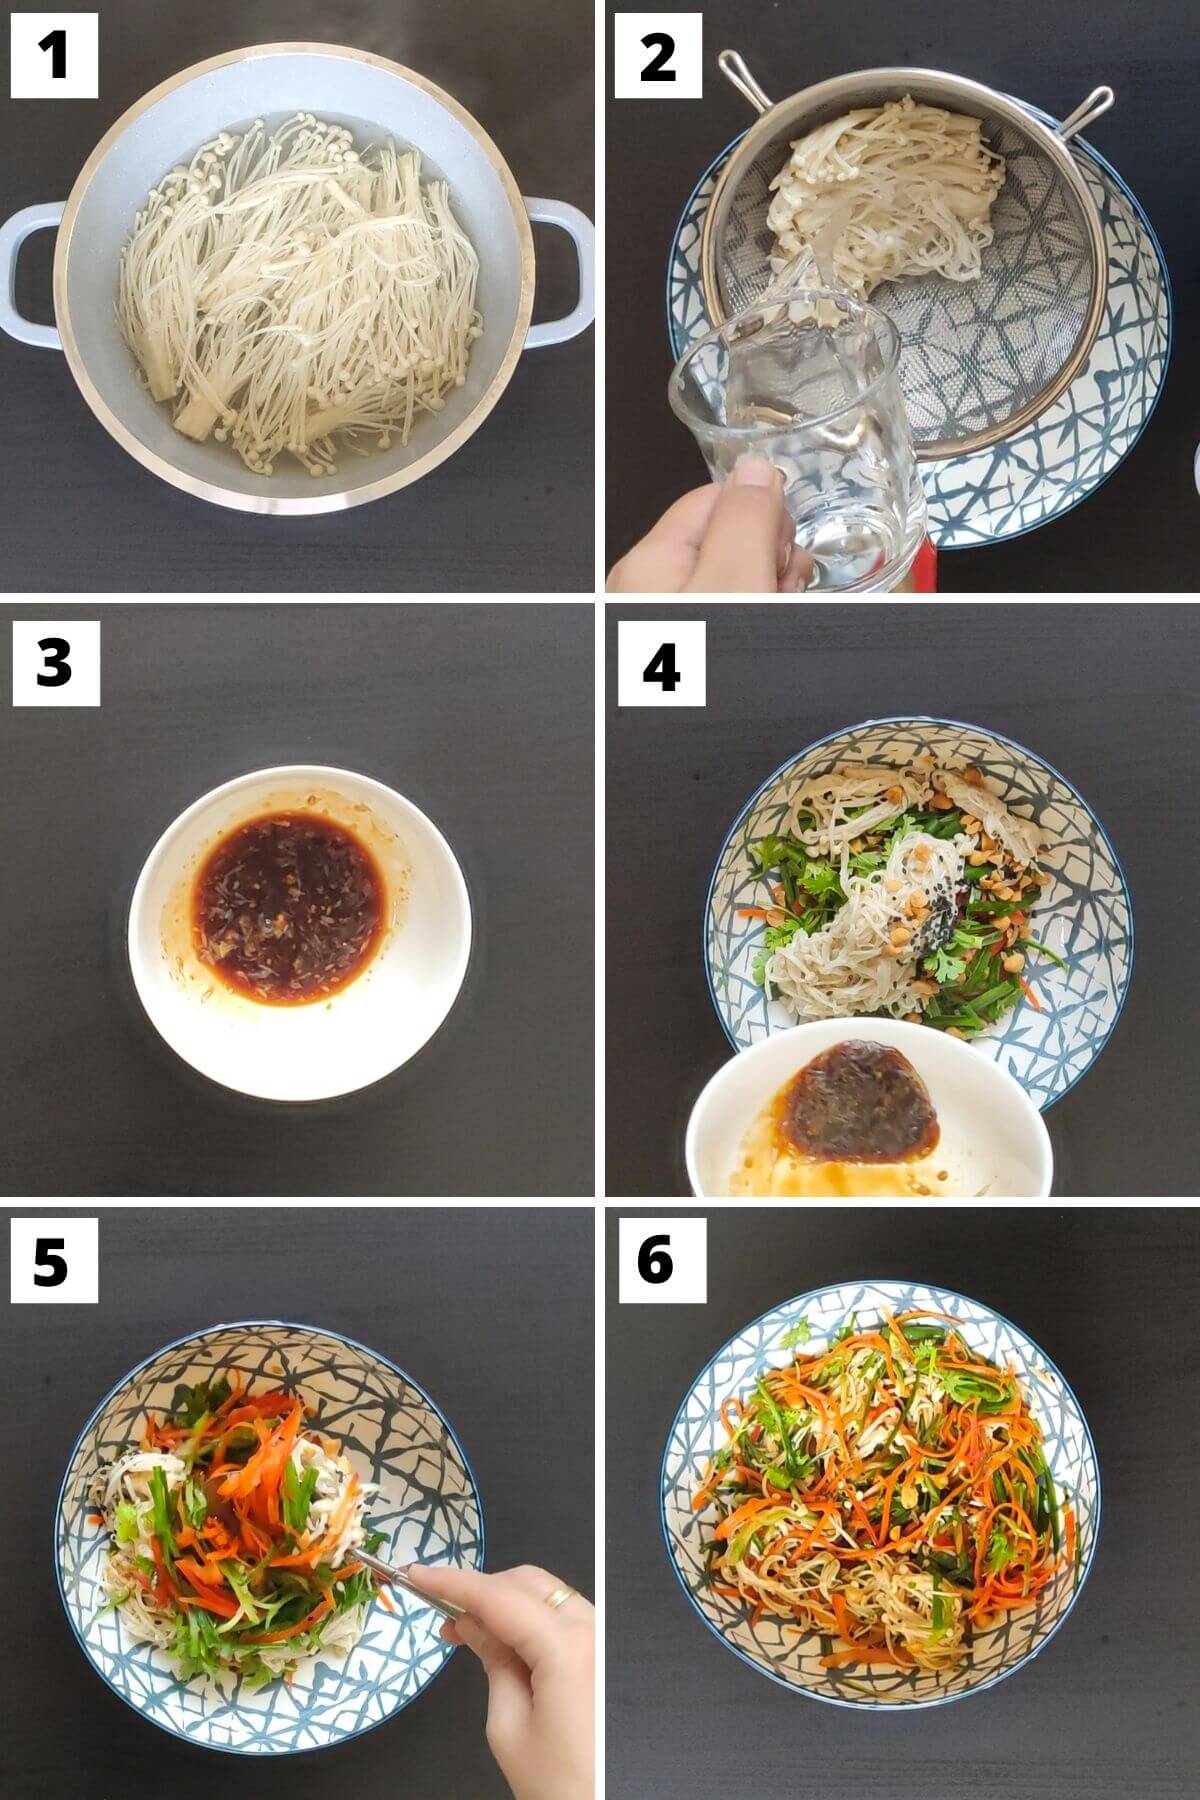 Steps to make Asian mushroom salad